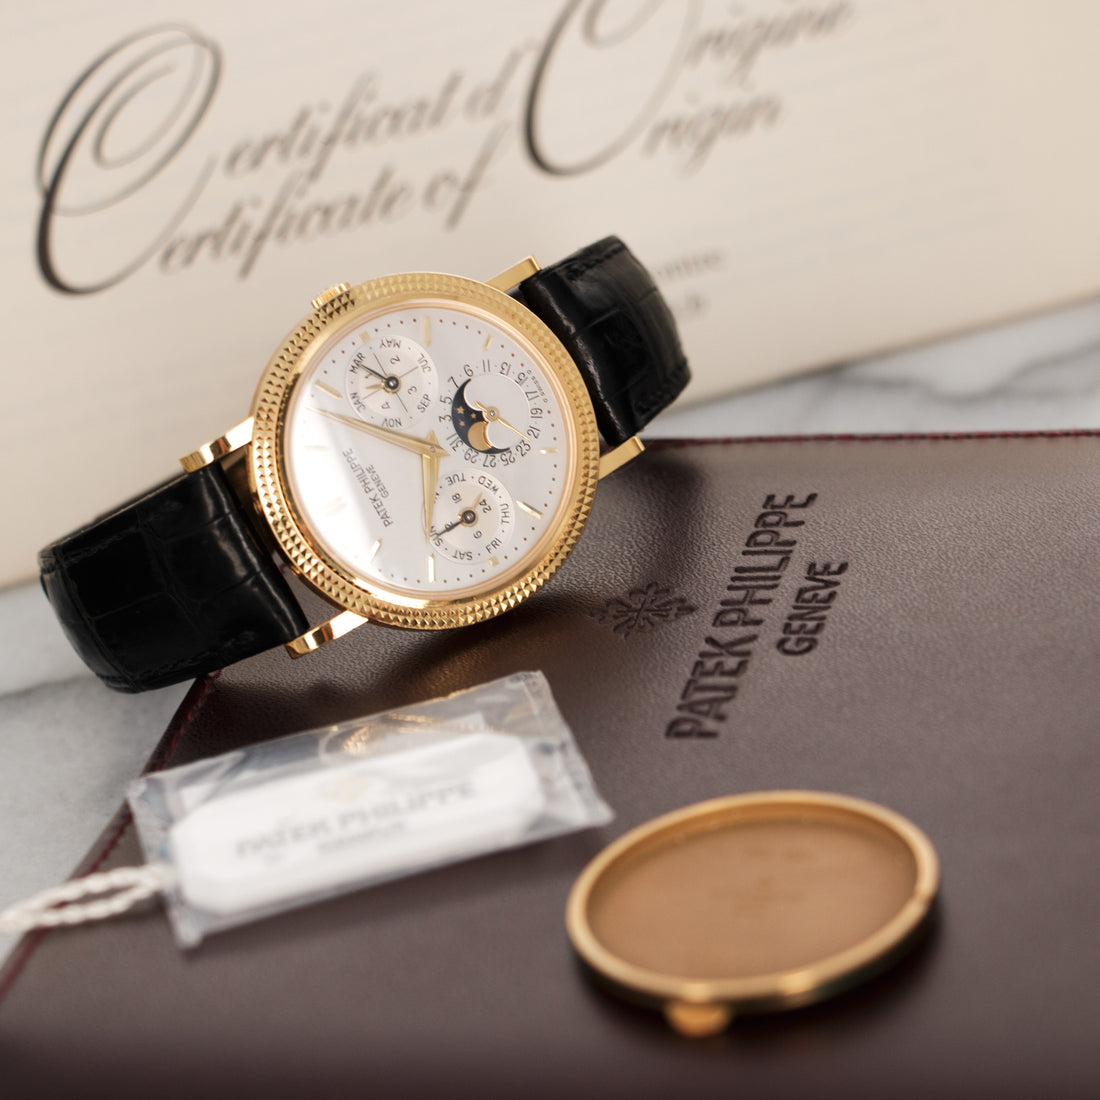 Patek Philippe Yellow Gold Perpetual Calendar Automatic Watch Ref. 5039